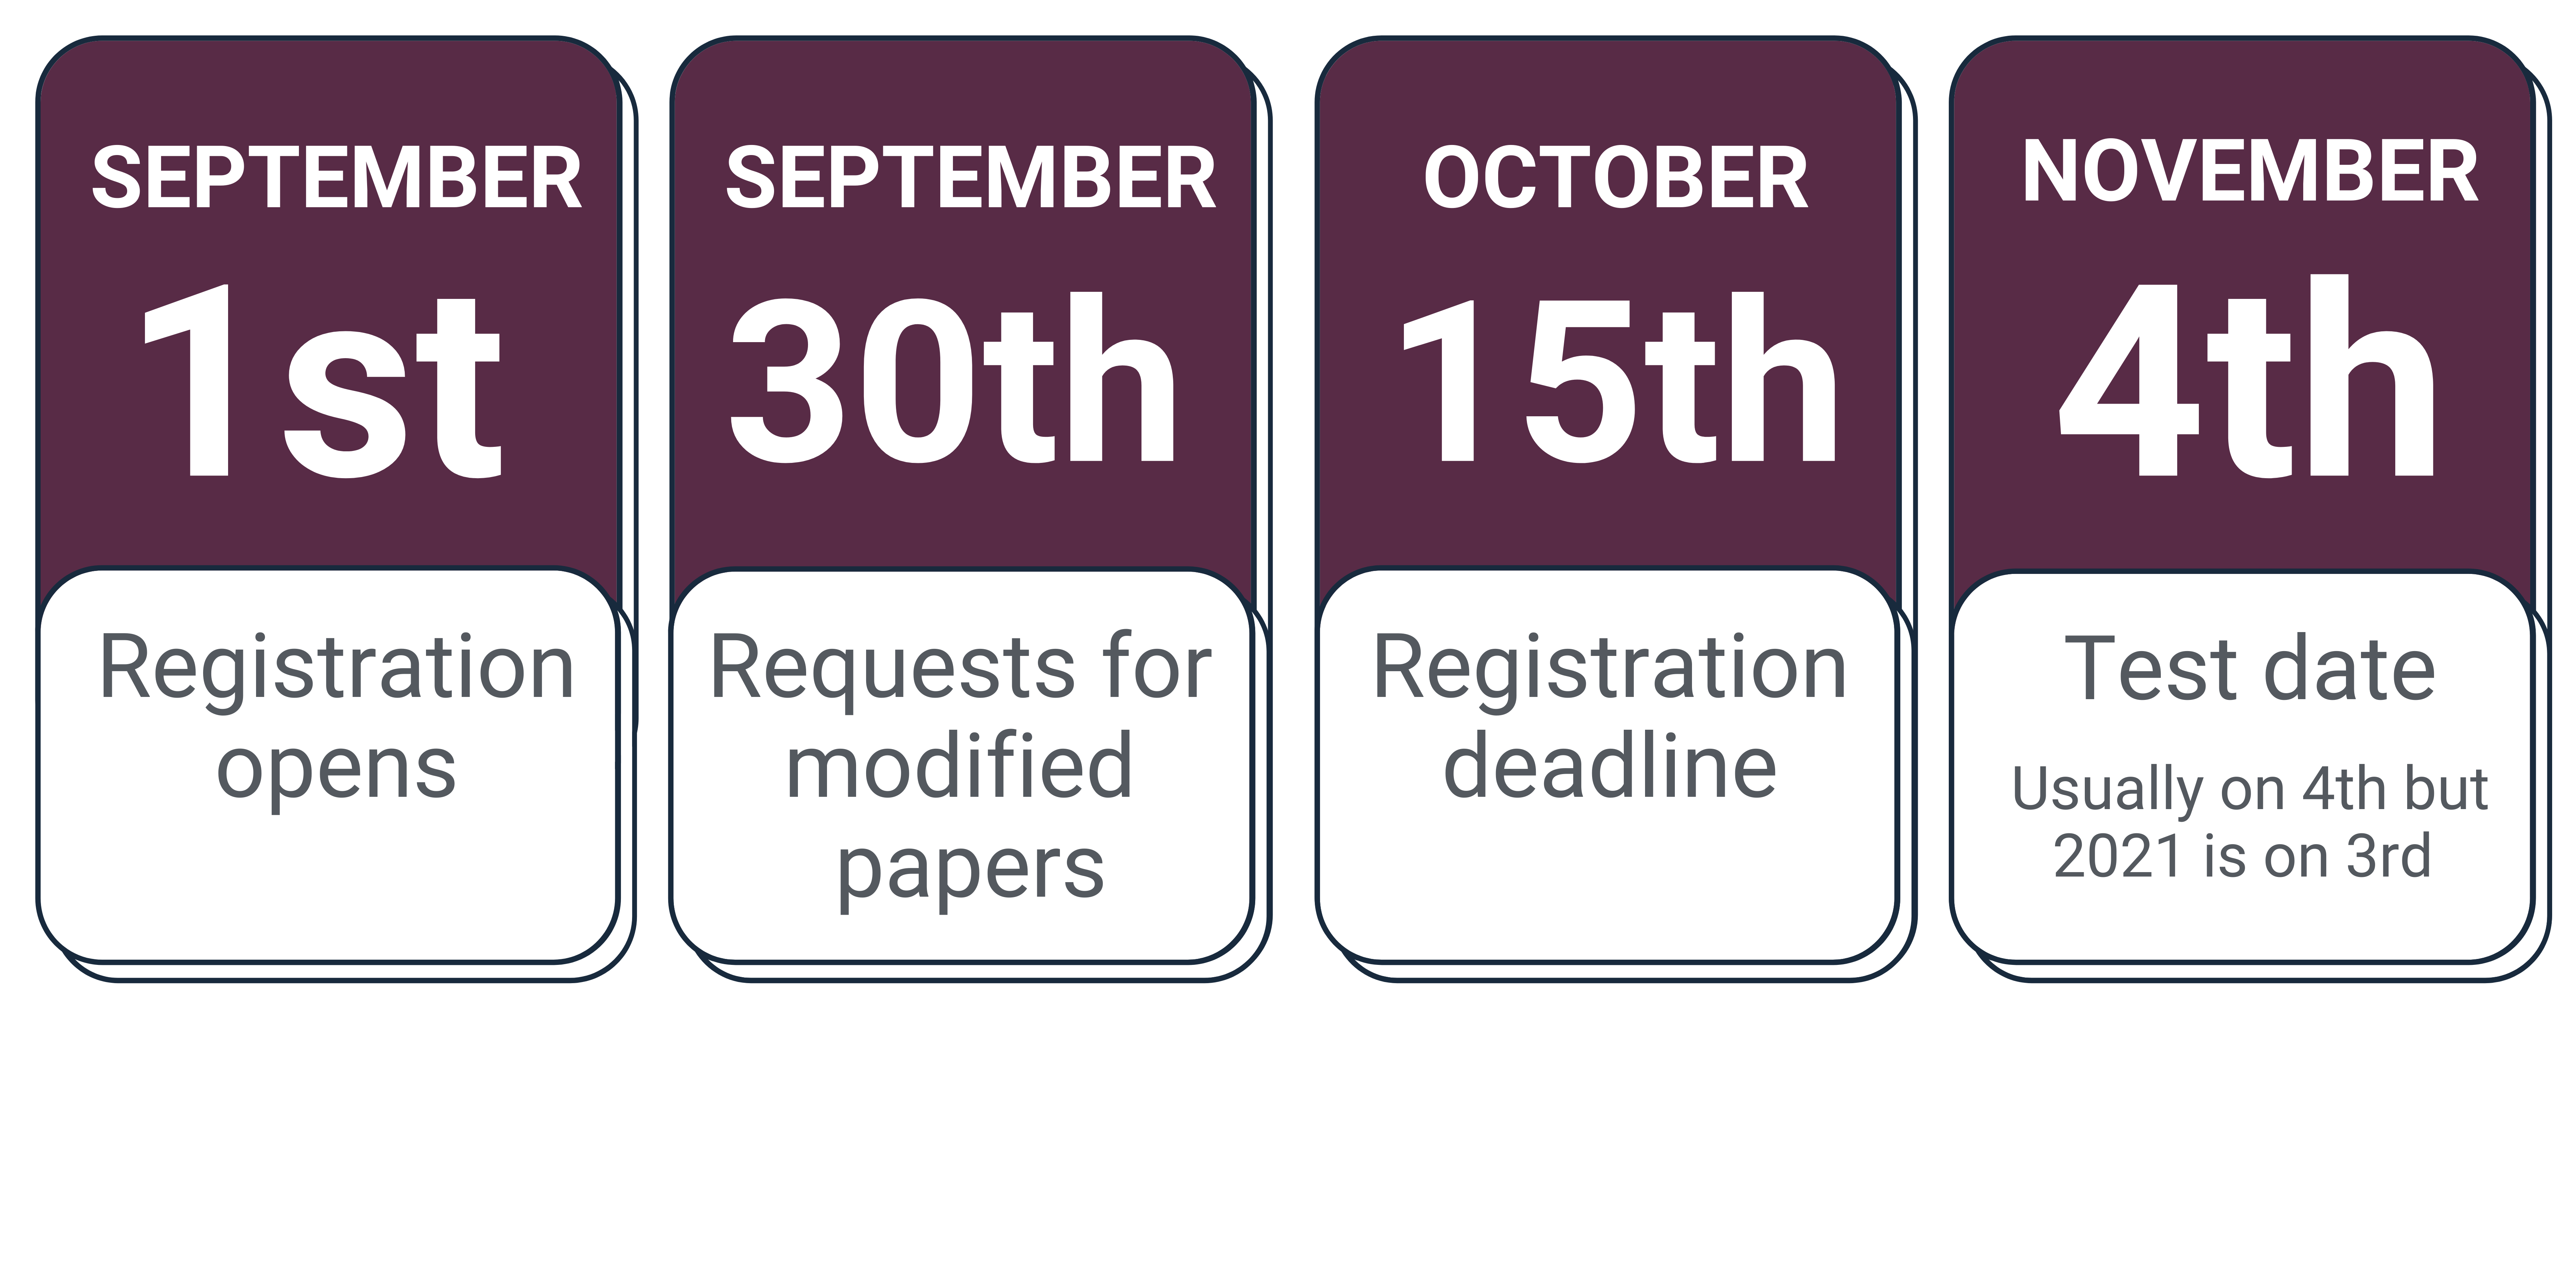 Registration opens September 1, Requests for modified question papers September 30, Registration deadline October 15 at 18.00, Test date usually November 4 but for 2021 03 November